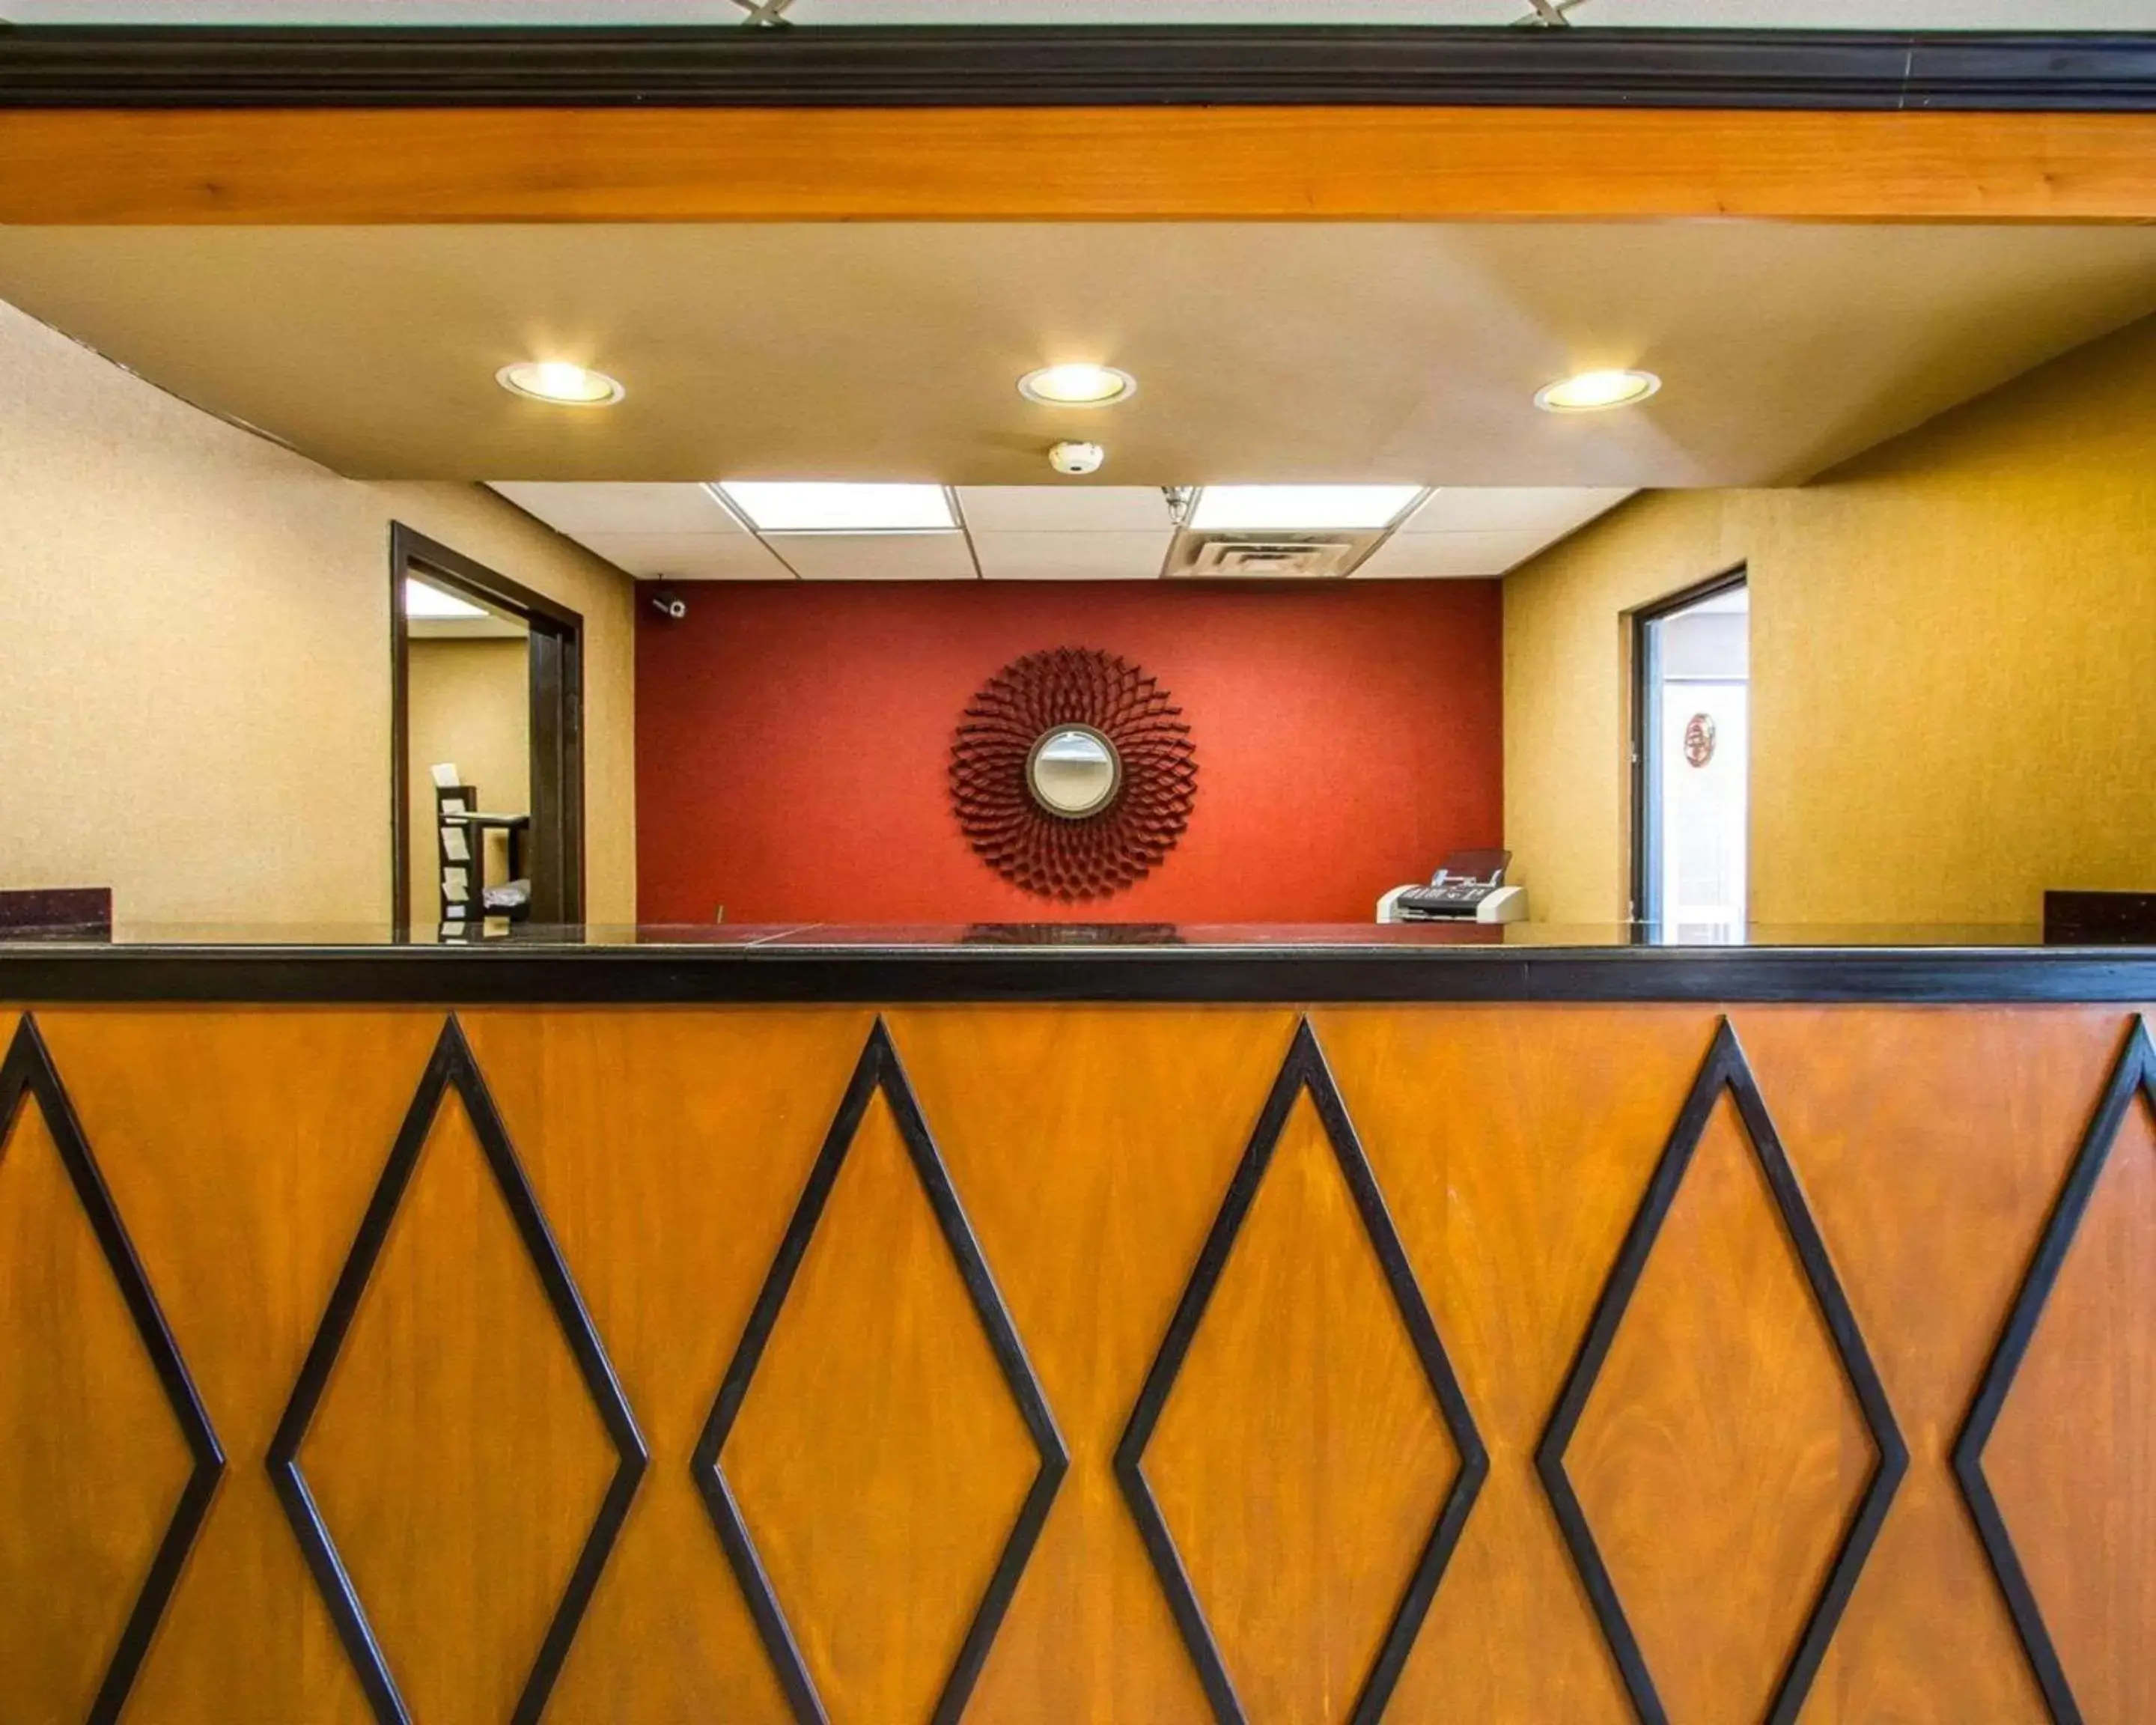 Lobby or reception, Lobby/Reception in Rodeway Inn & Suites